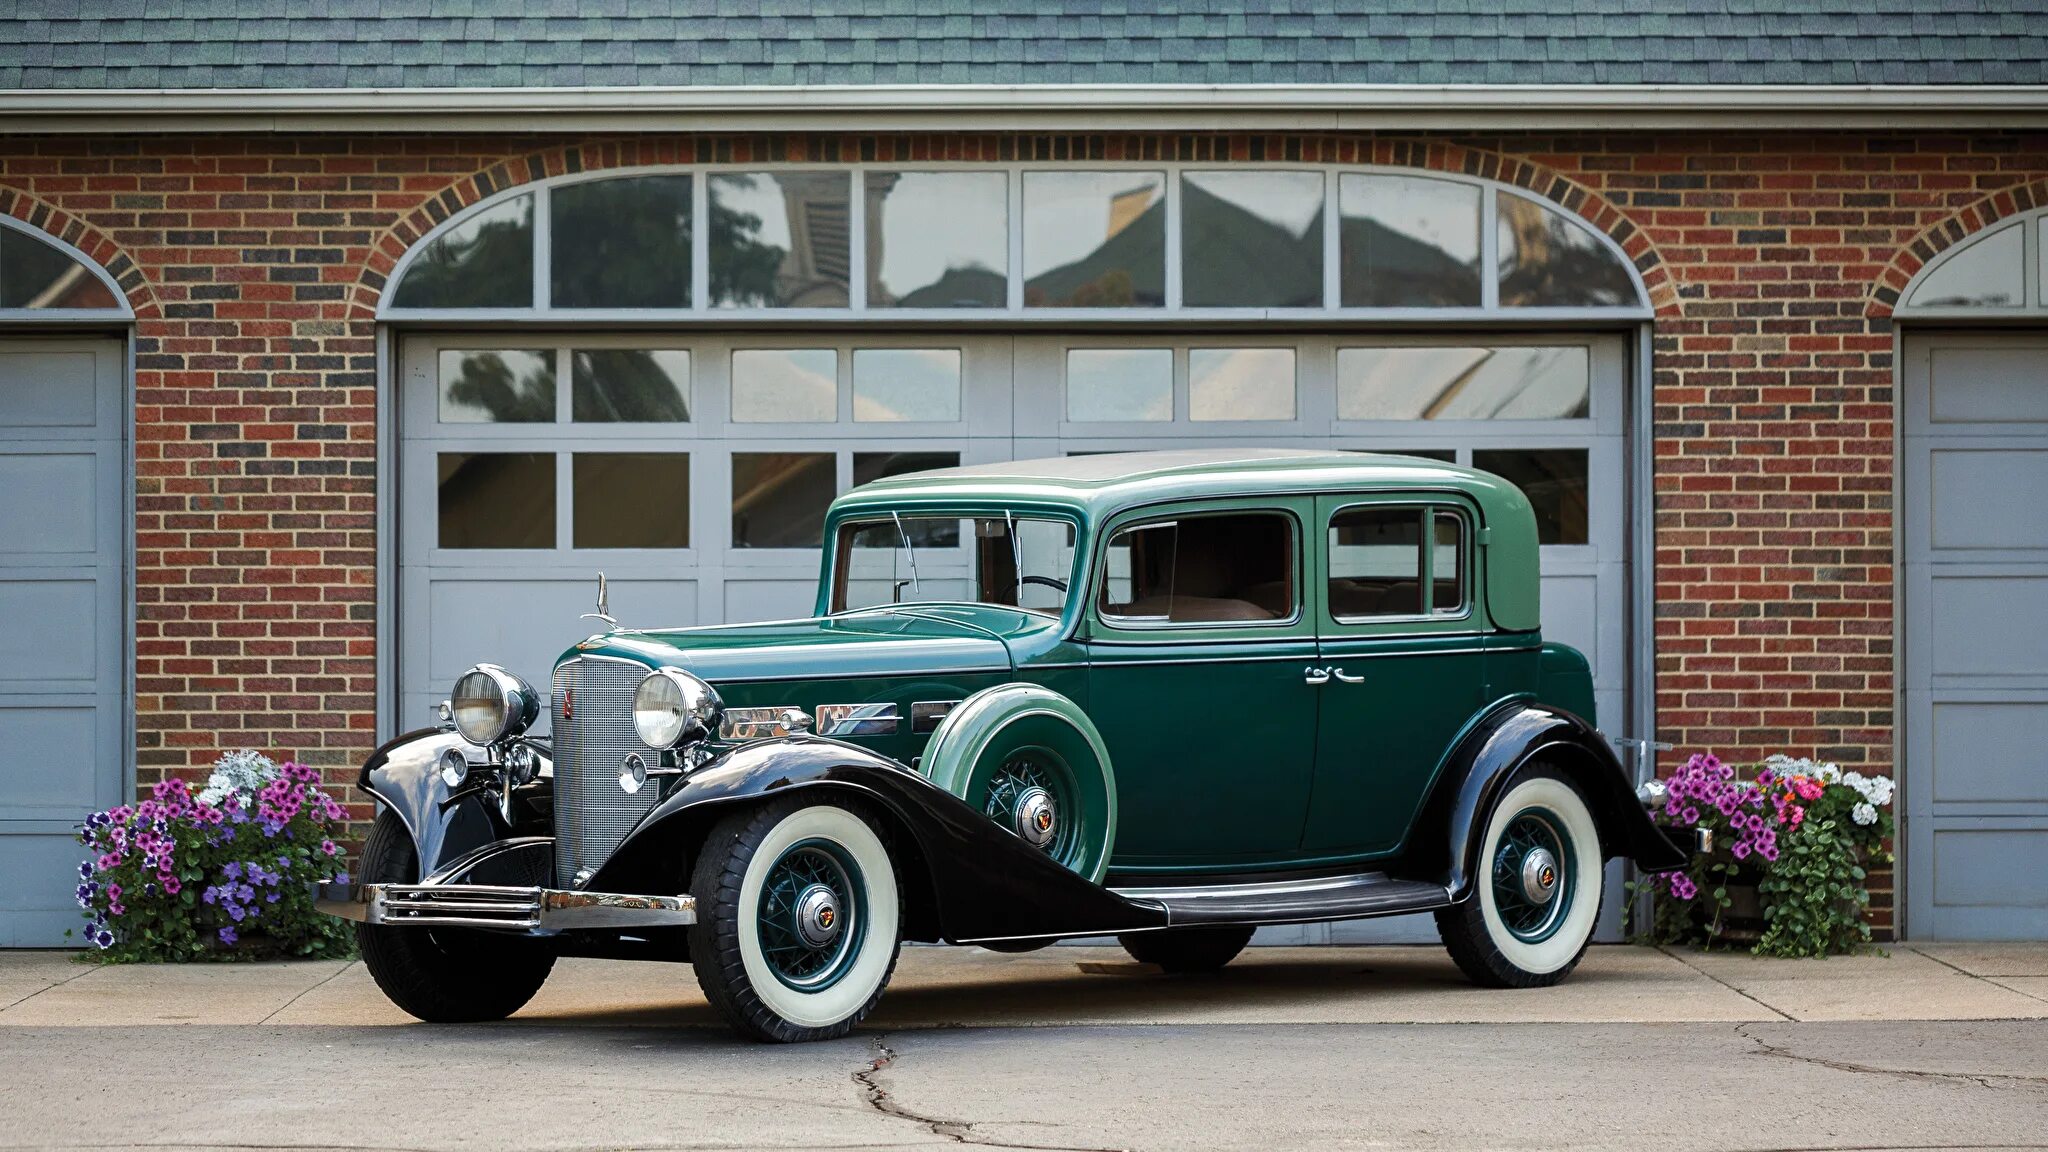 Машины древности. 1933 Cadillac Town sedan. Cadillac Town car 1933. Паккард 12 1933. Кадиллак v12.